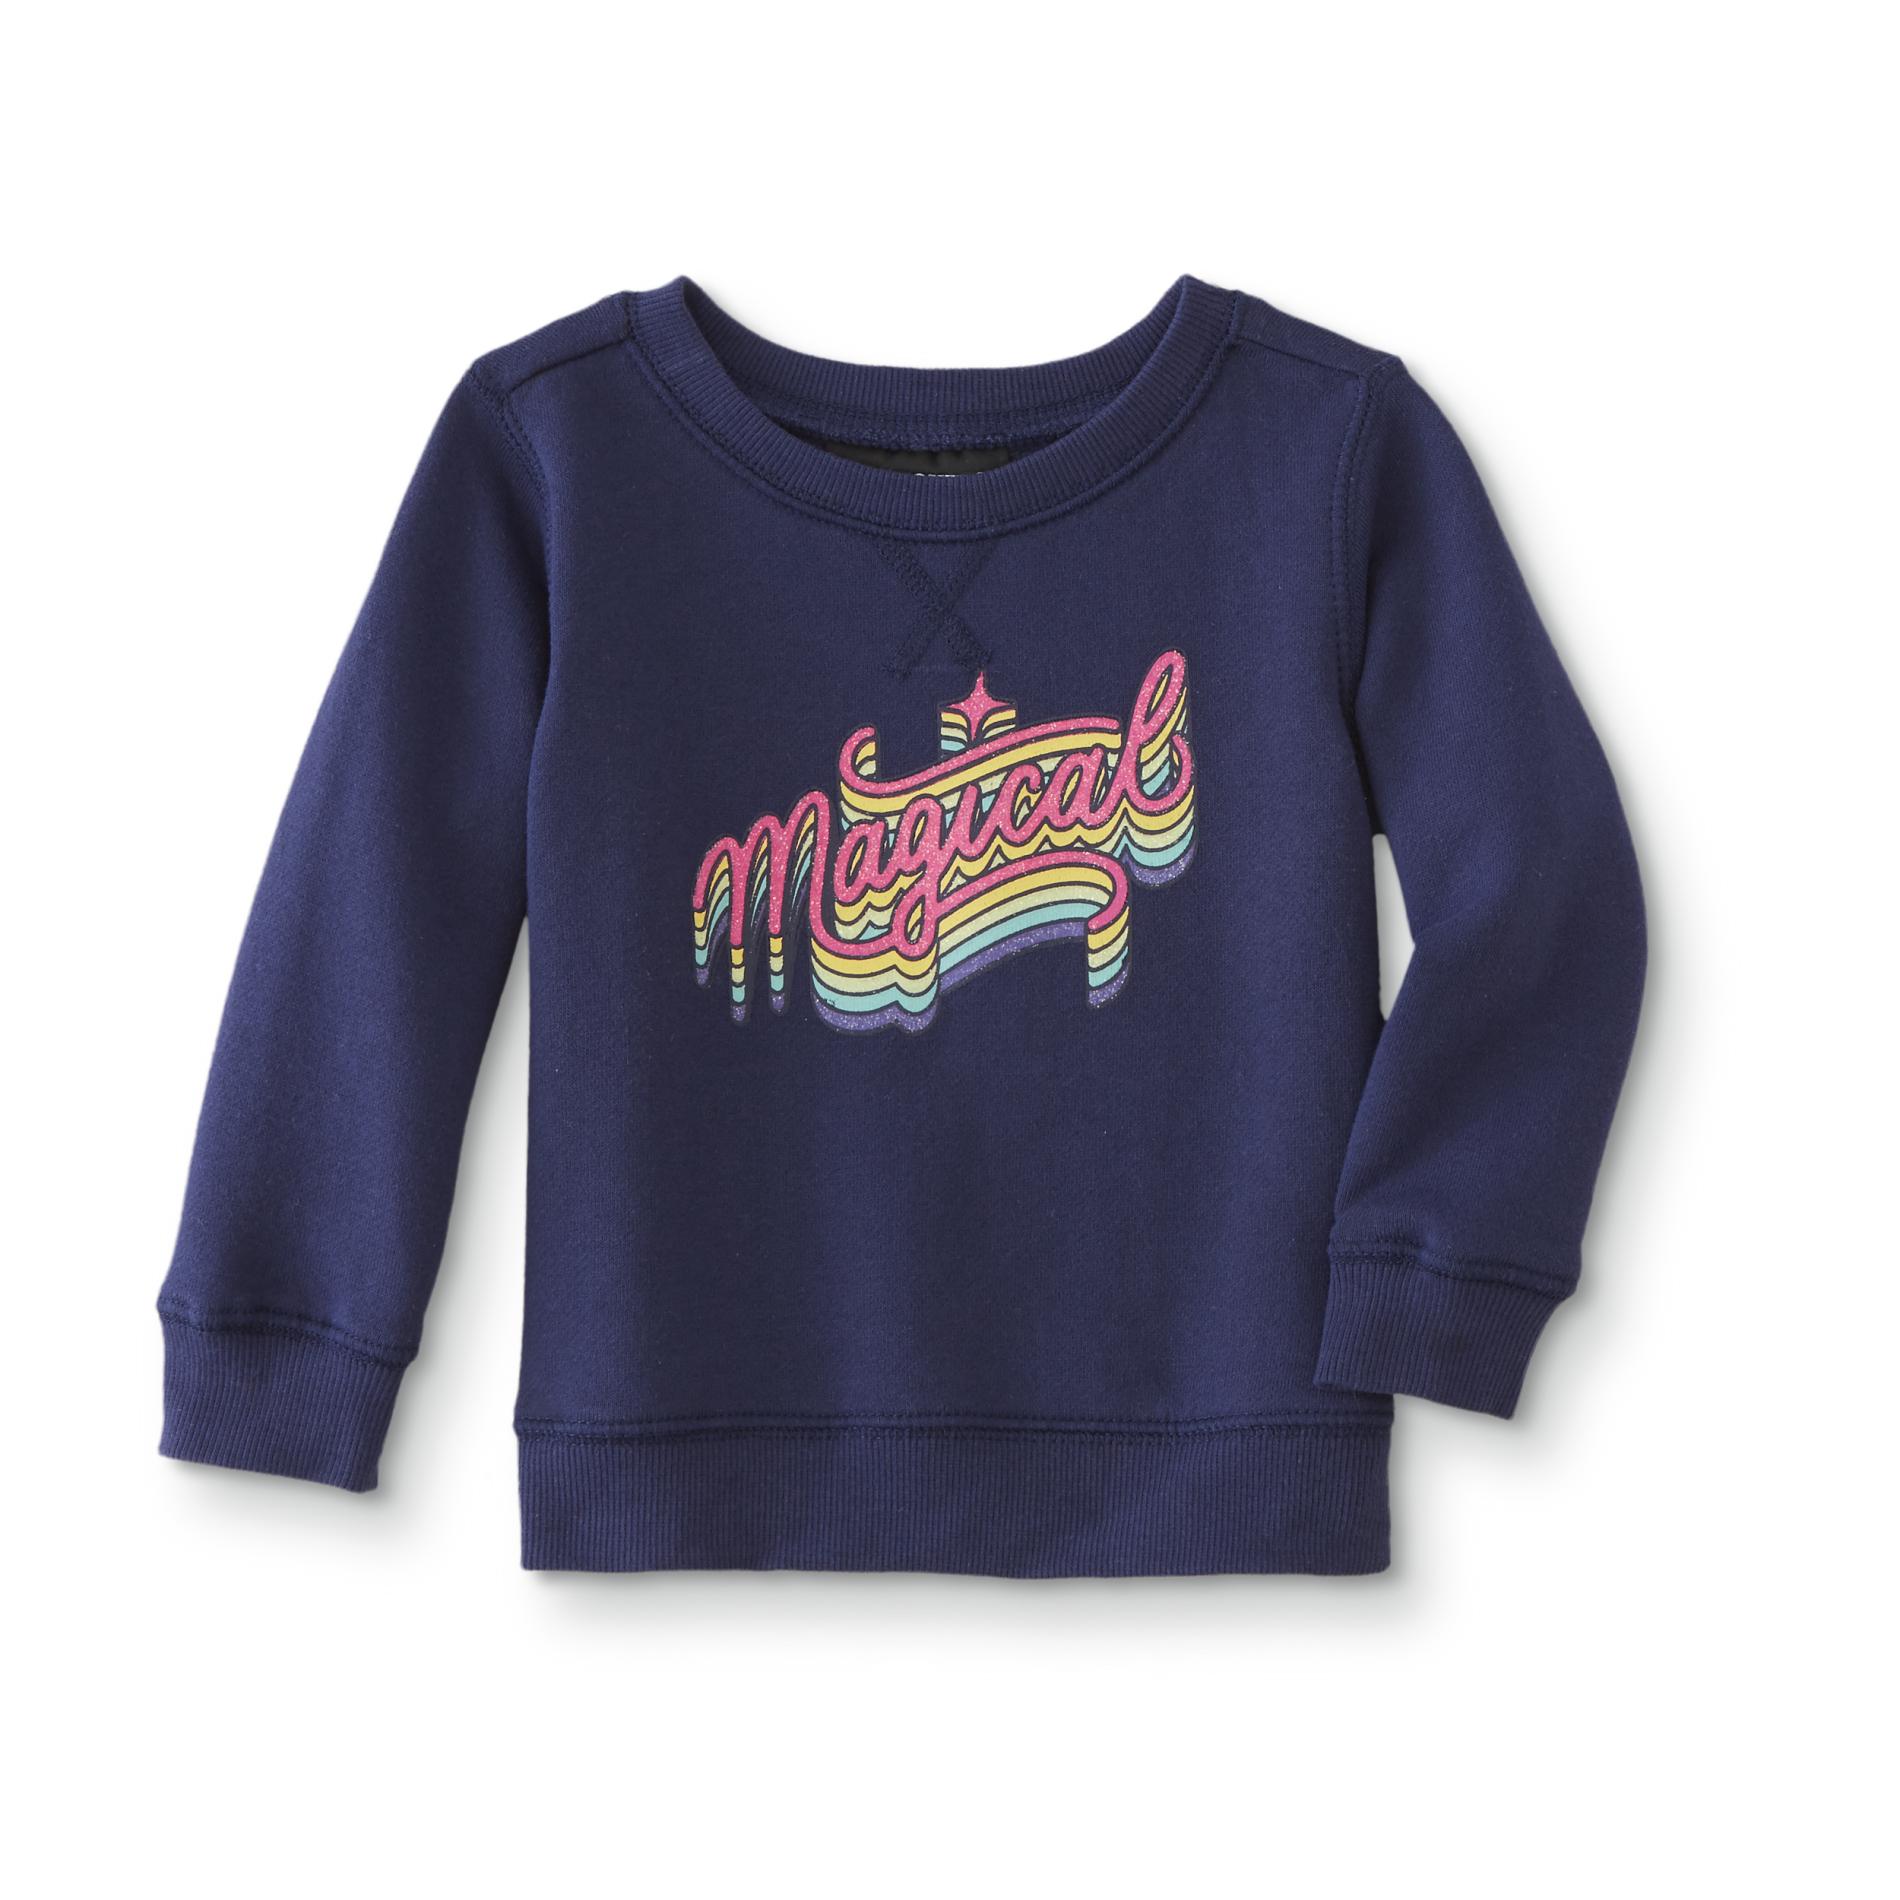 Joe Boxer Infant & Toddler Girls' Sweatshirt - Magical